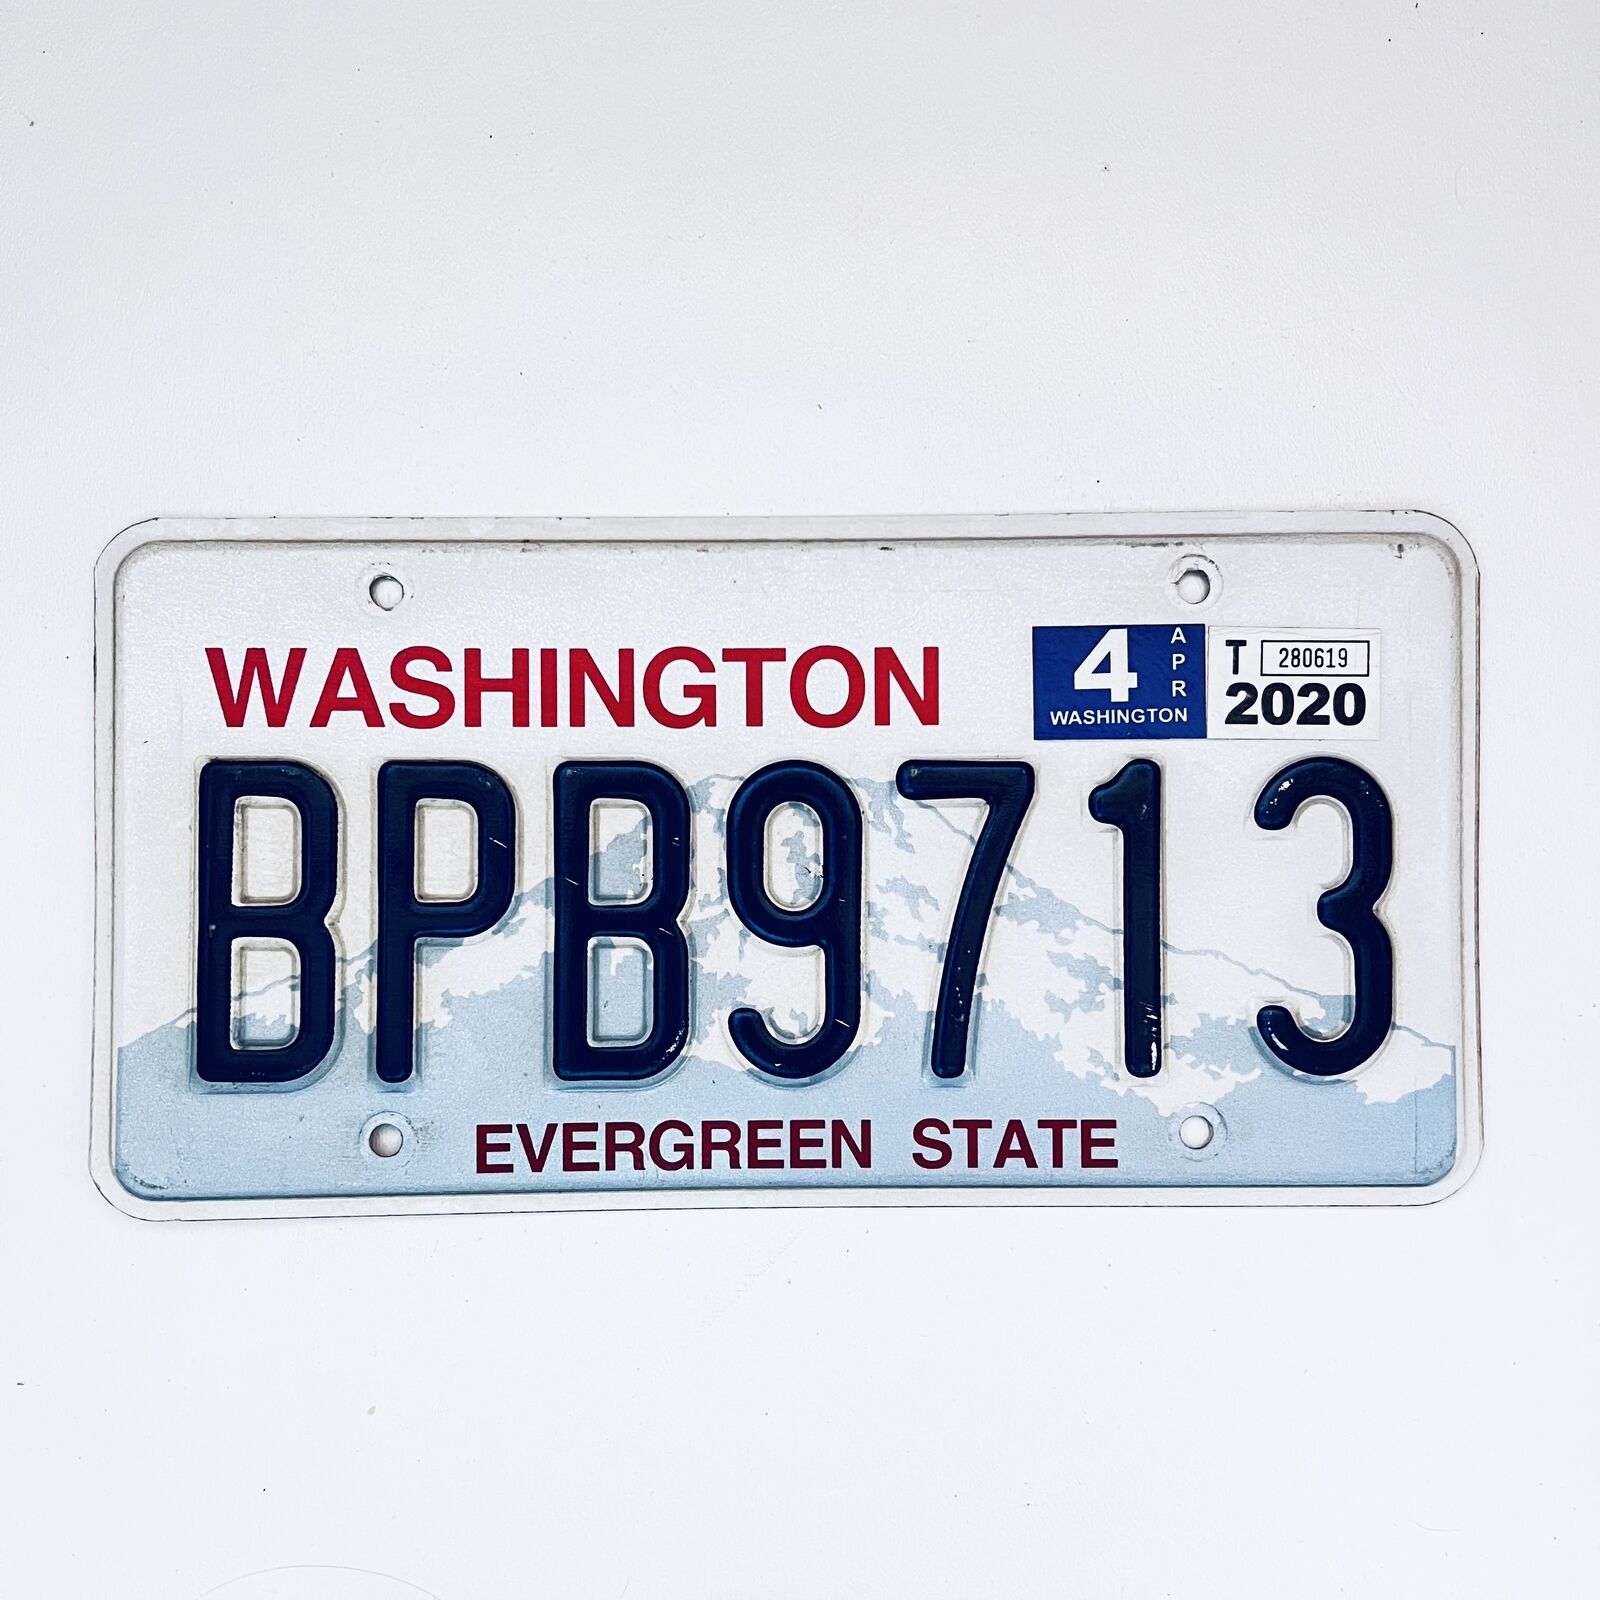 2020 United States Washington Evergreen Passenger License Plate BPB9713